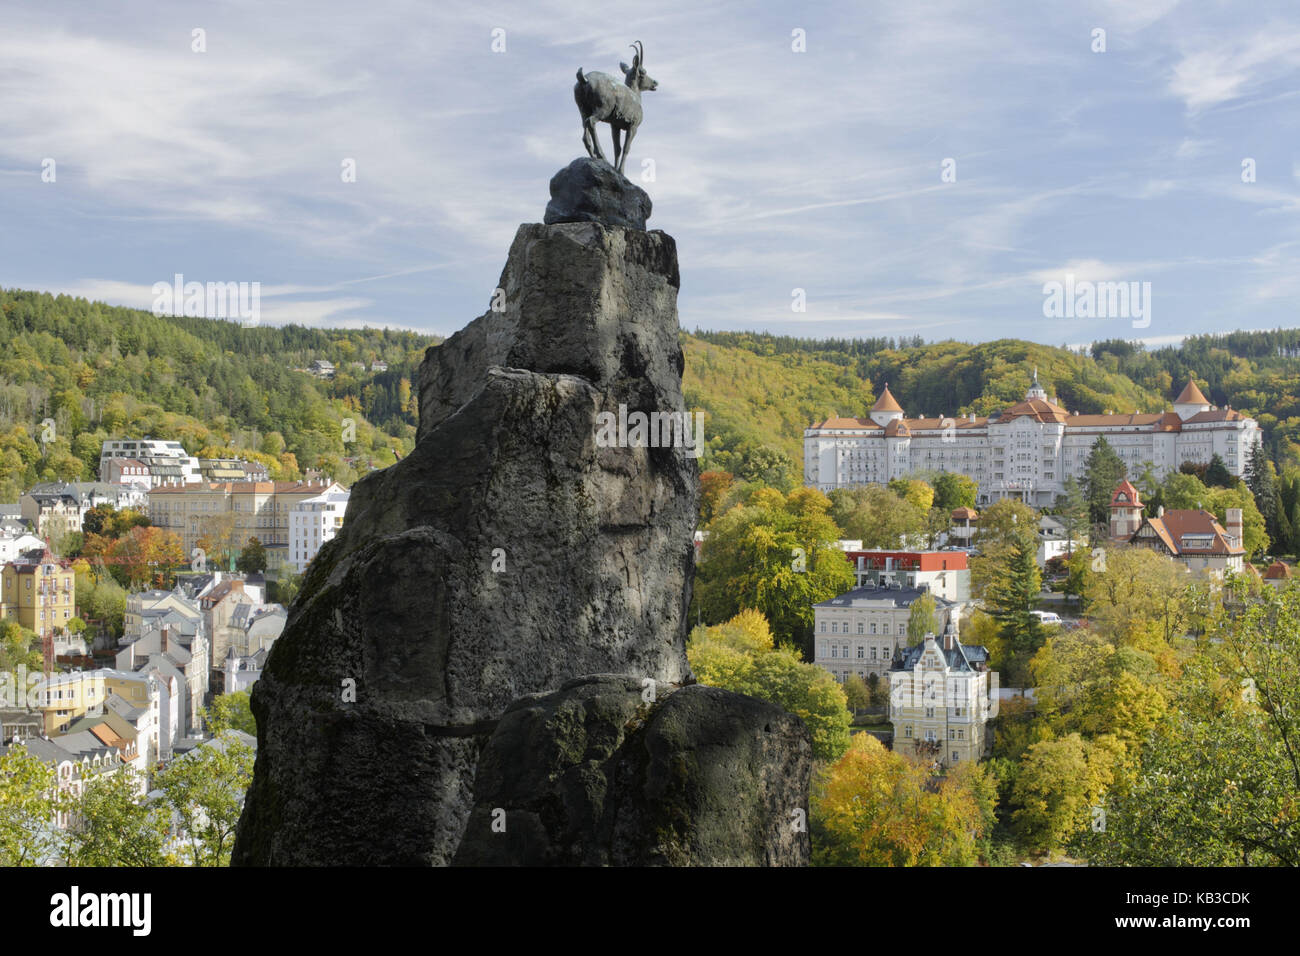 Estatua, Gämse en roca sobre Karlsbad, original de la estatua desarrollada en 1851 del escultor berlinés August Kiss, República Checa, Europa, Foto de stock